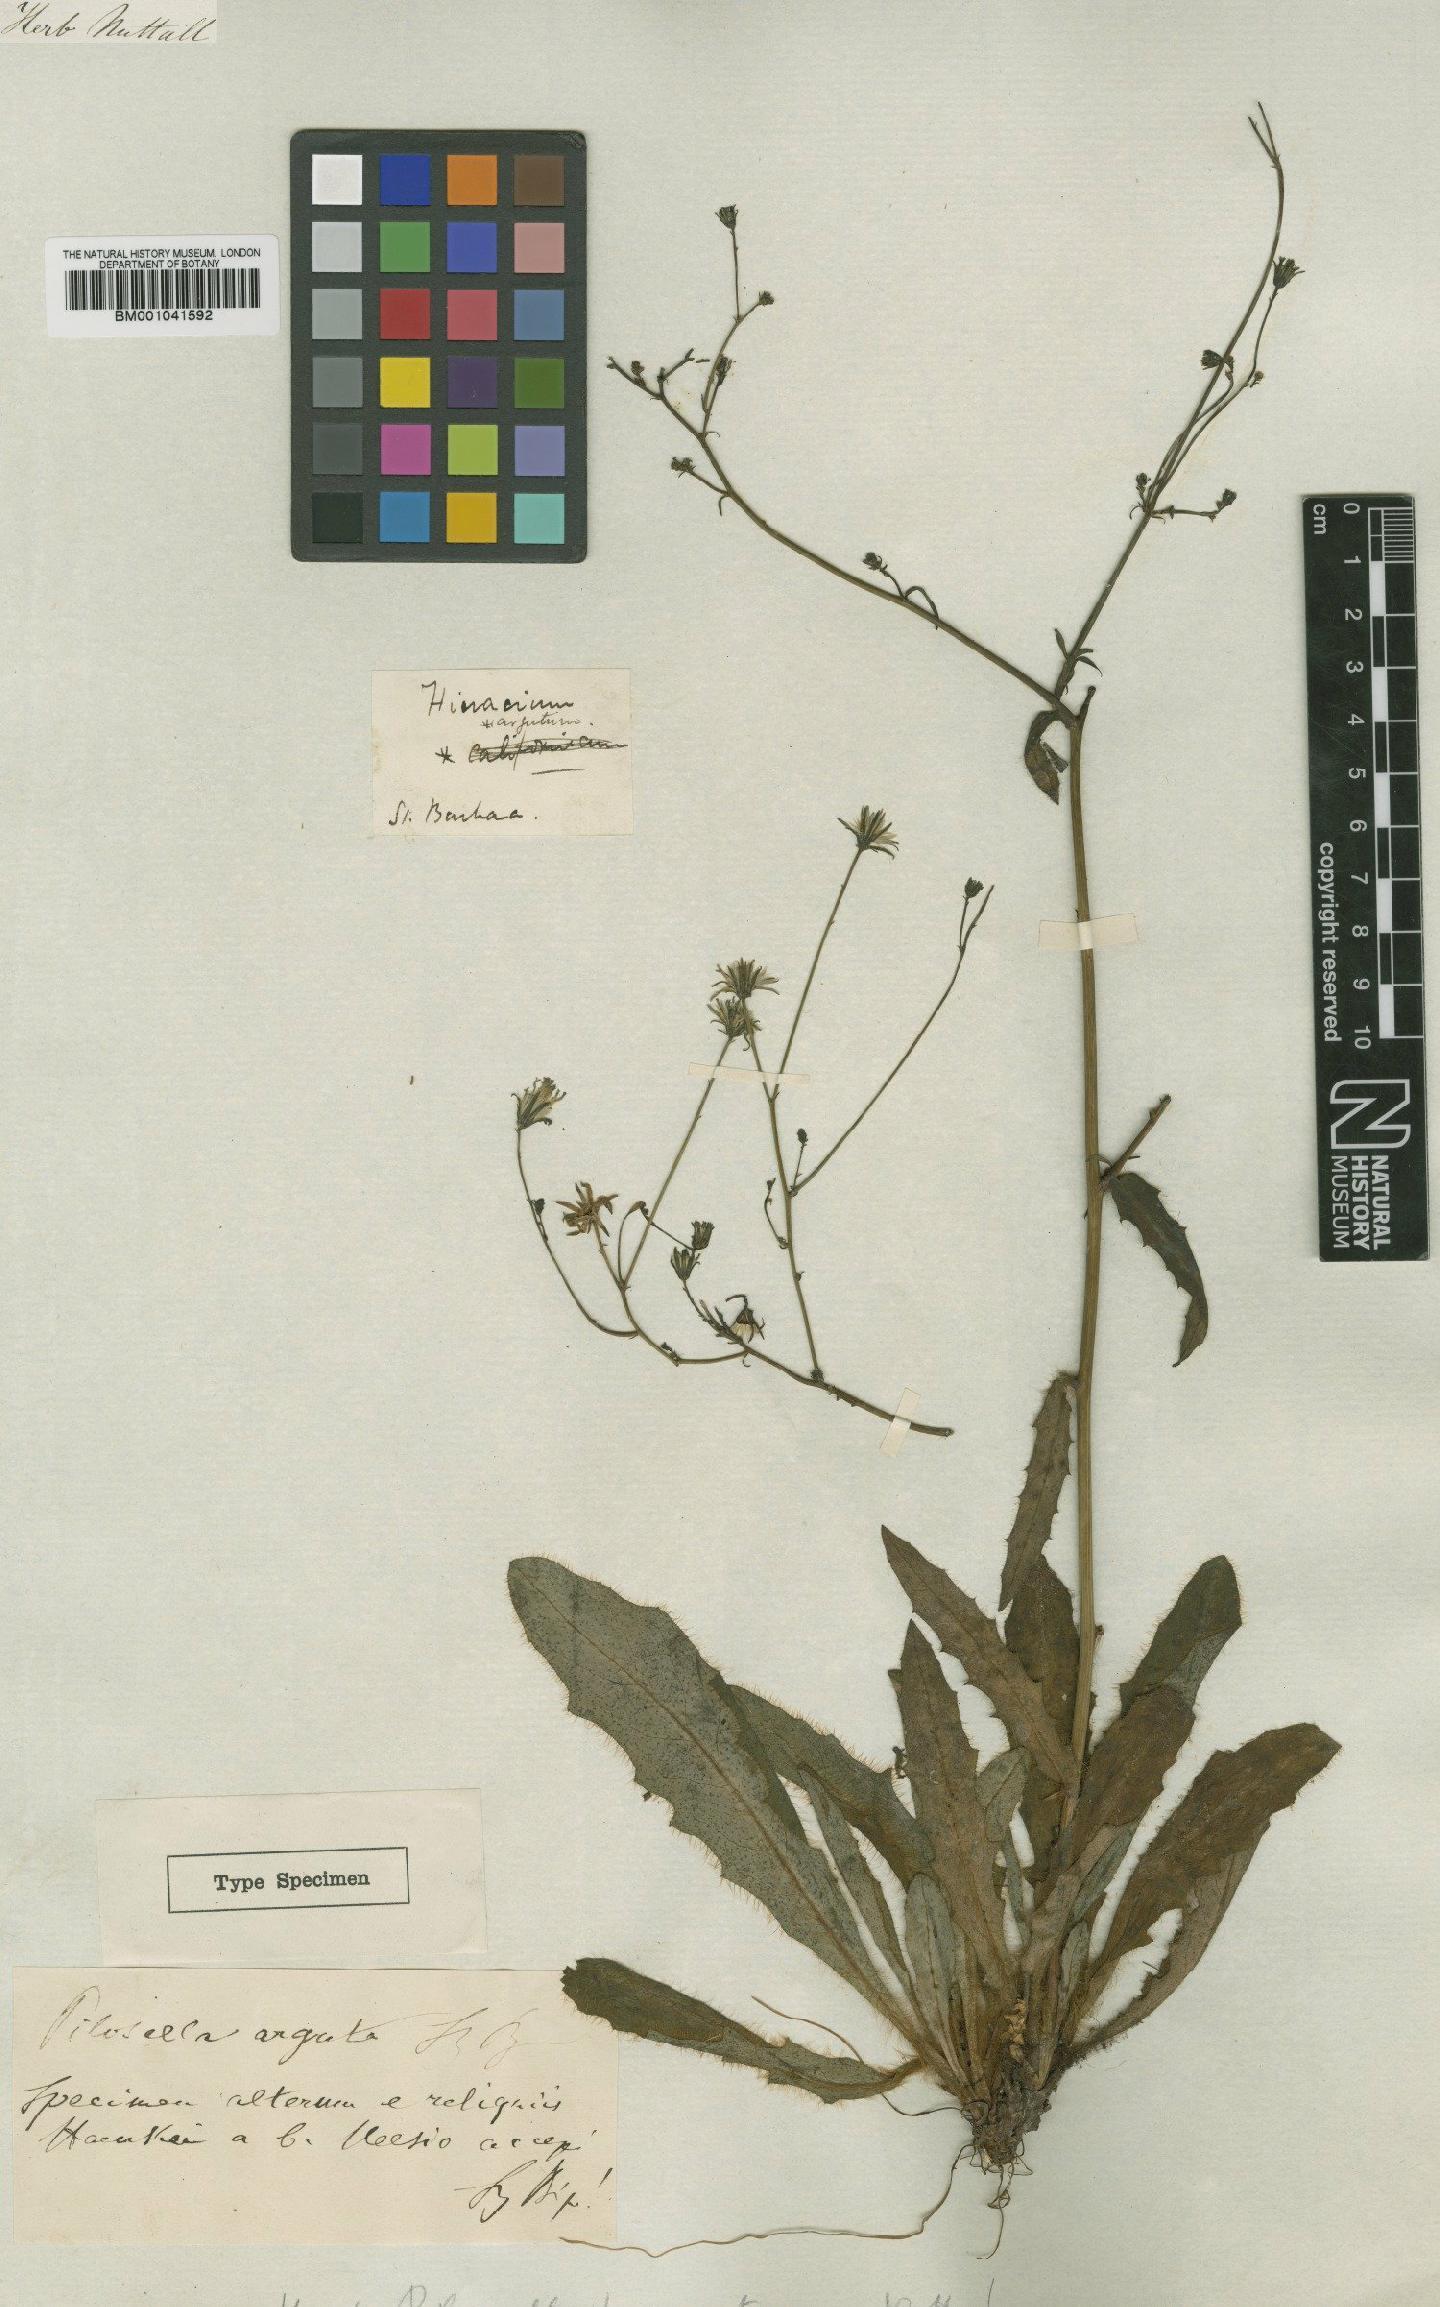 To NHMUK collection (Hieracium argutum Nutt.; Type; NHMUK:ecatalogue:1163628)